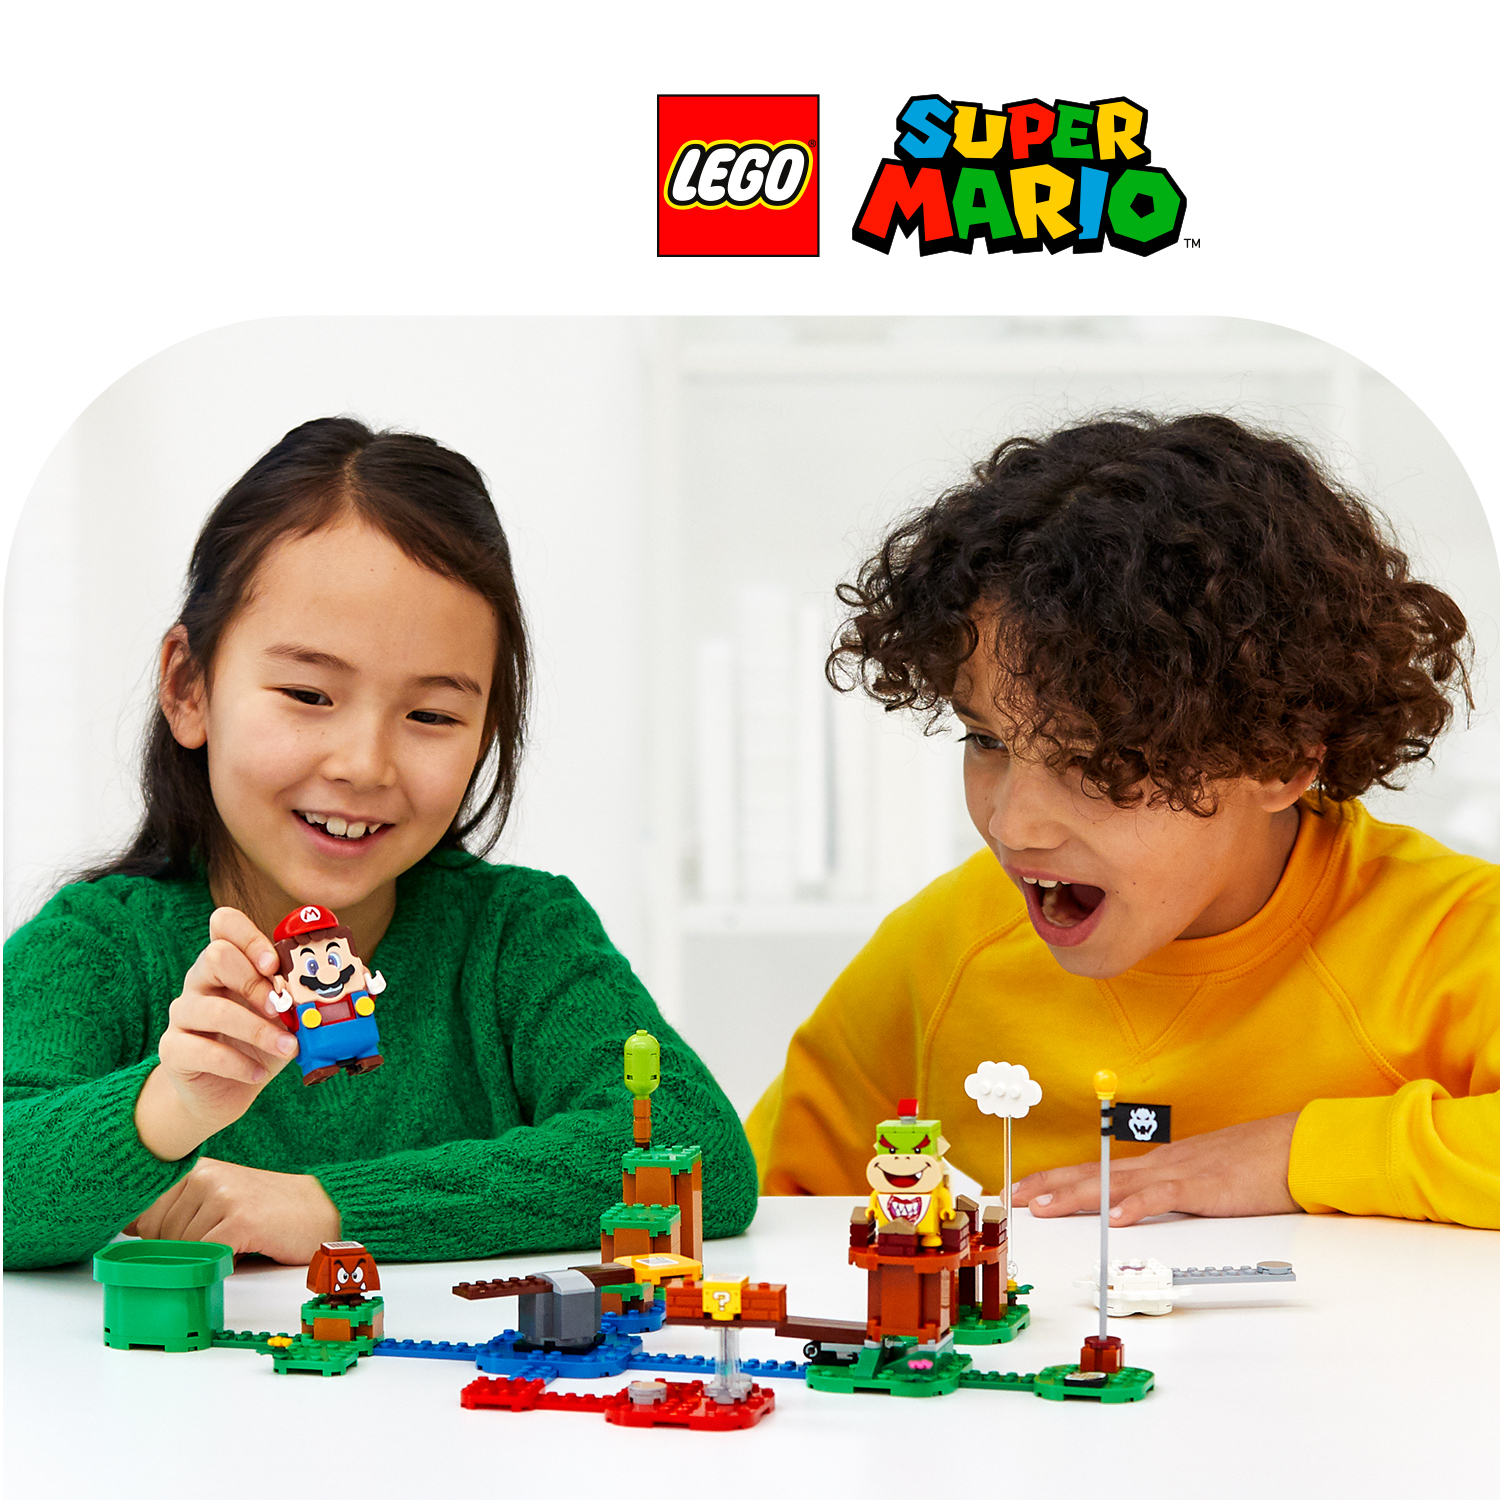 Dobrodružství s LEGO® Mariem u vás doma!